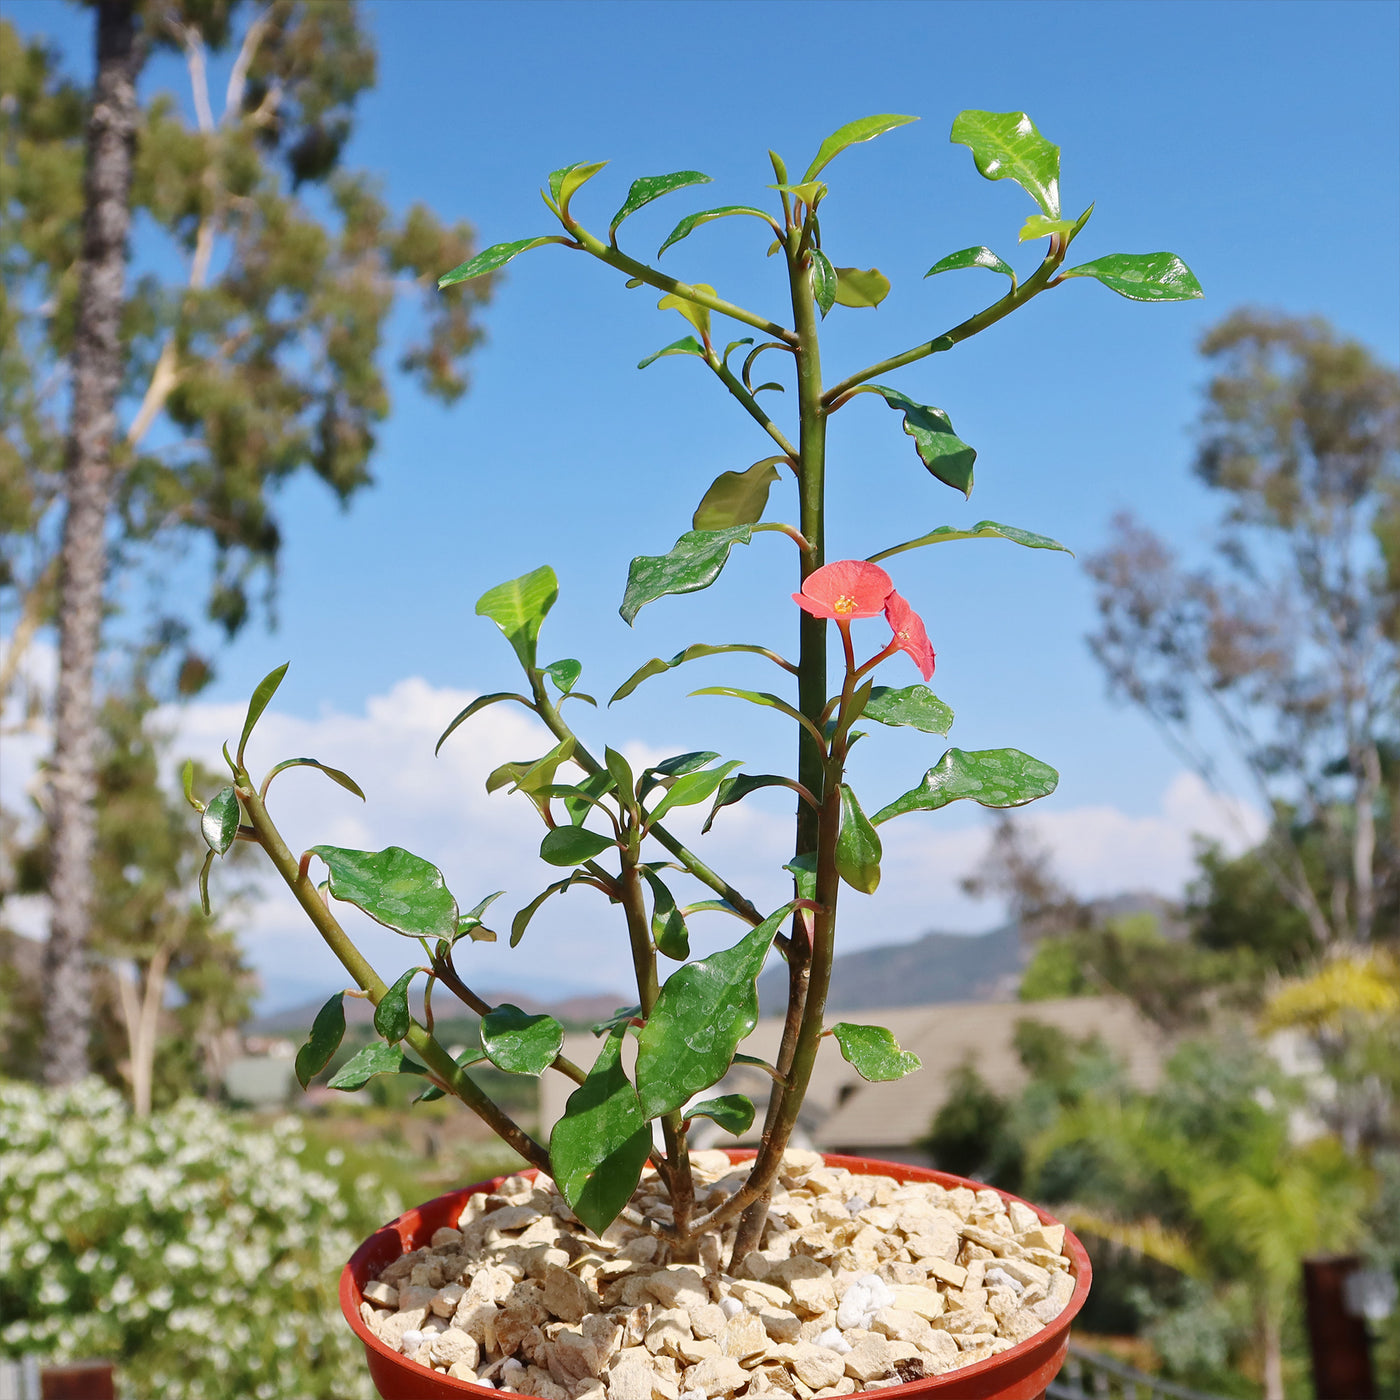 Thornless Crown of Thorns - Euphorbia geroldii